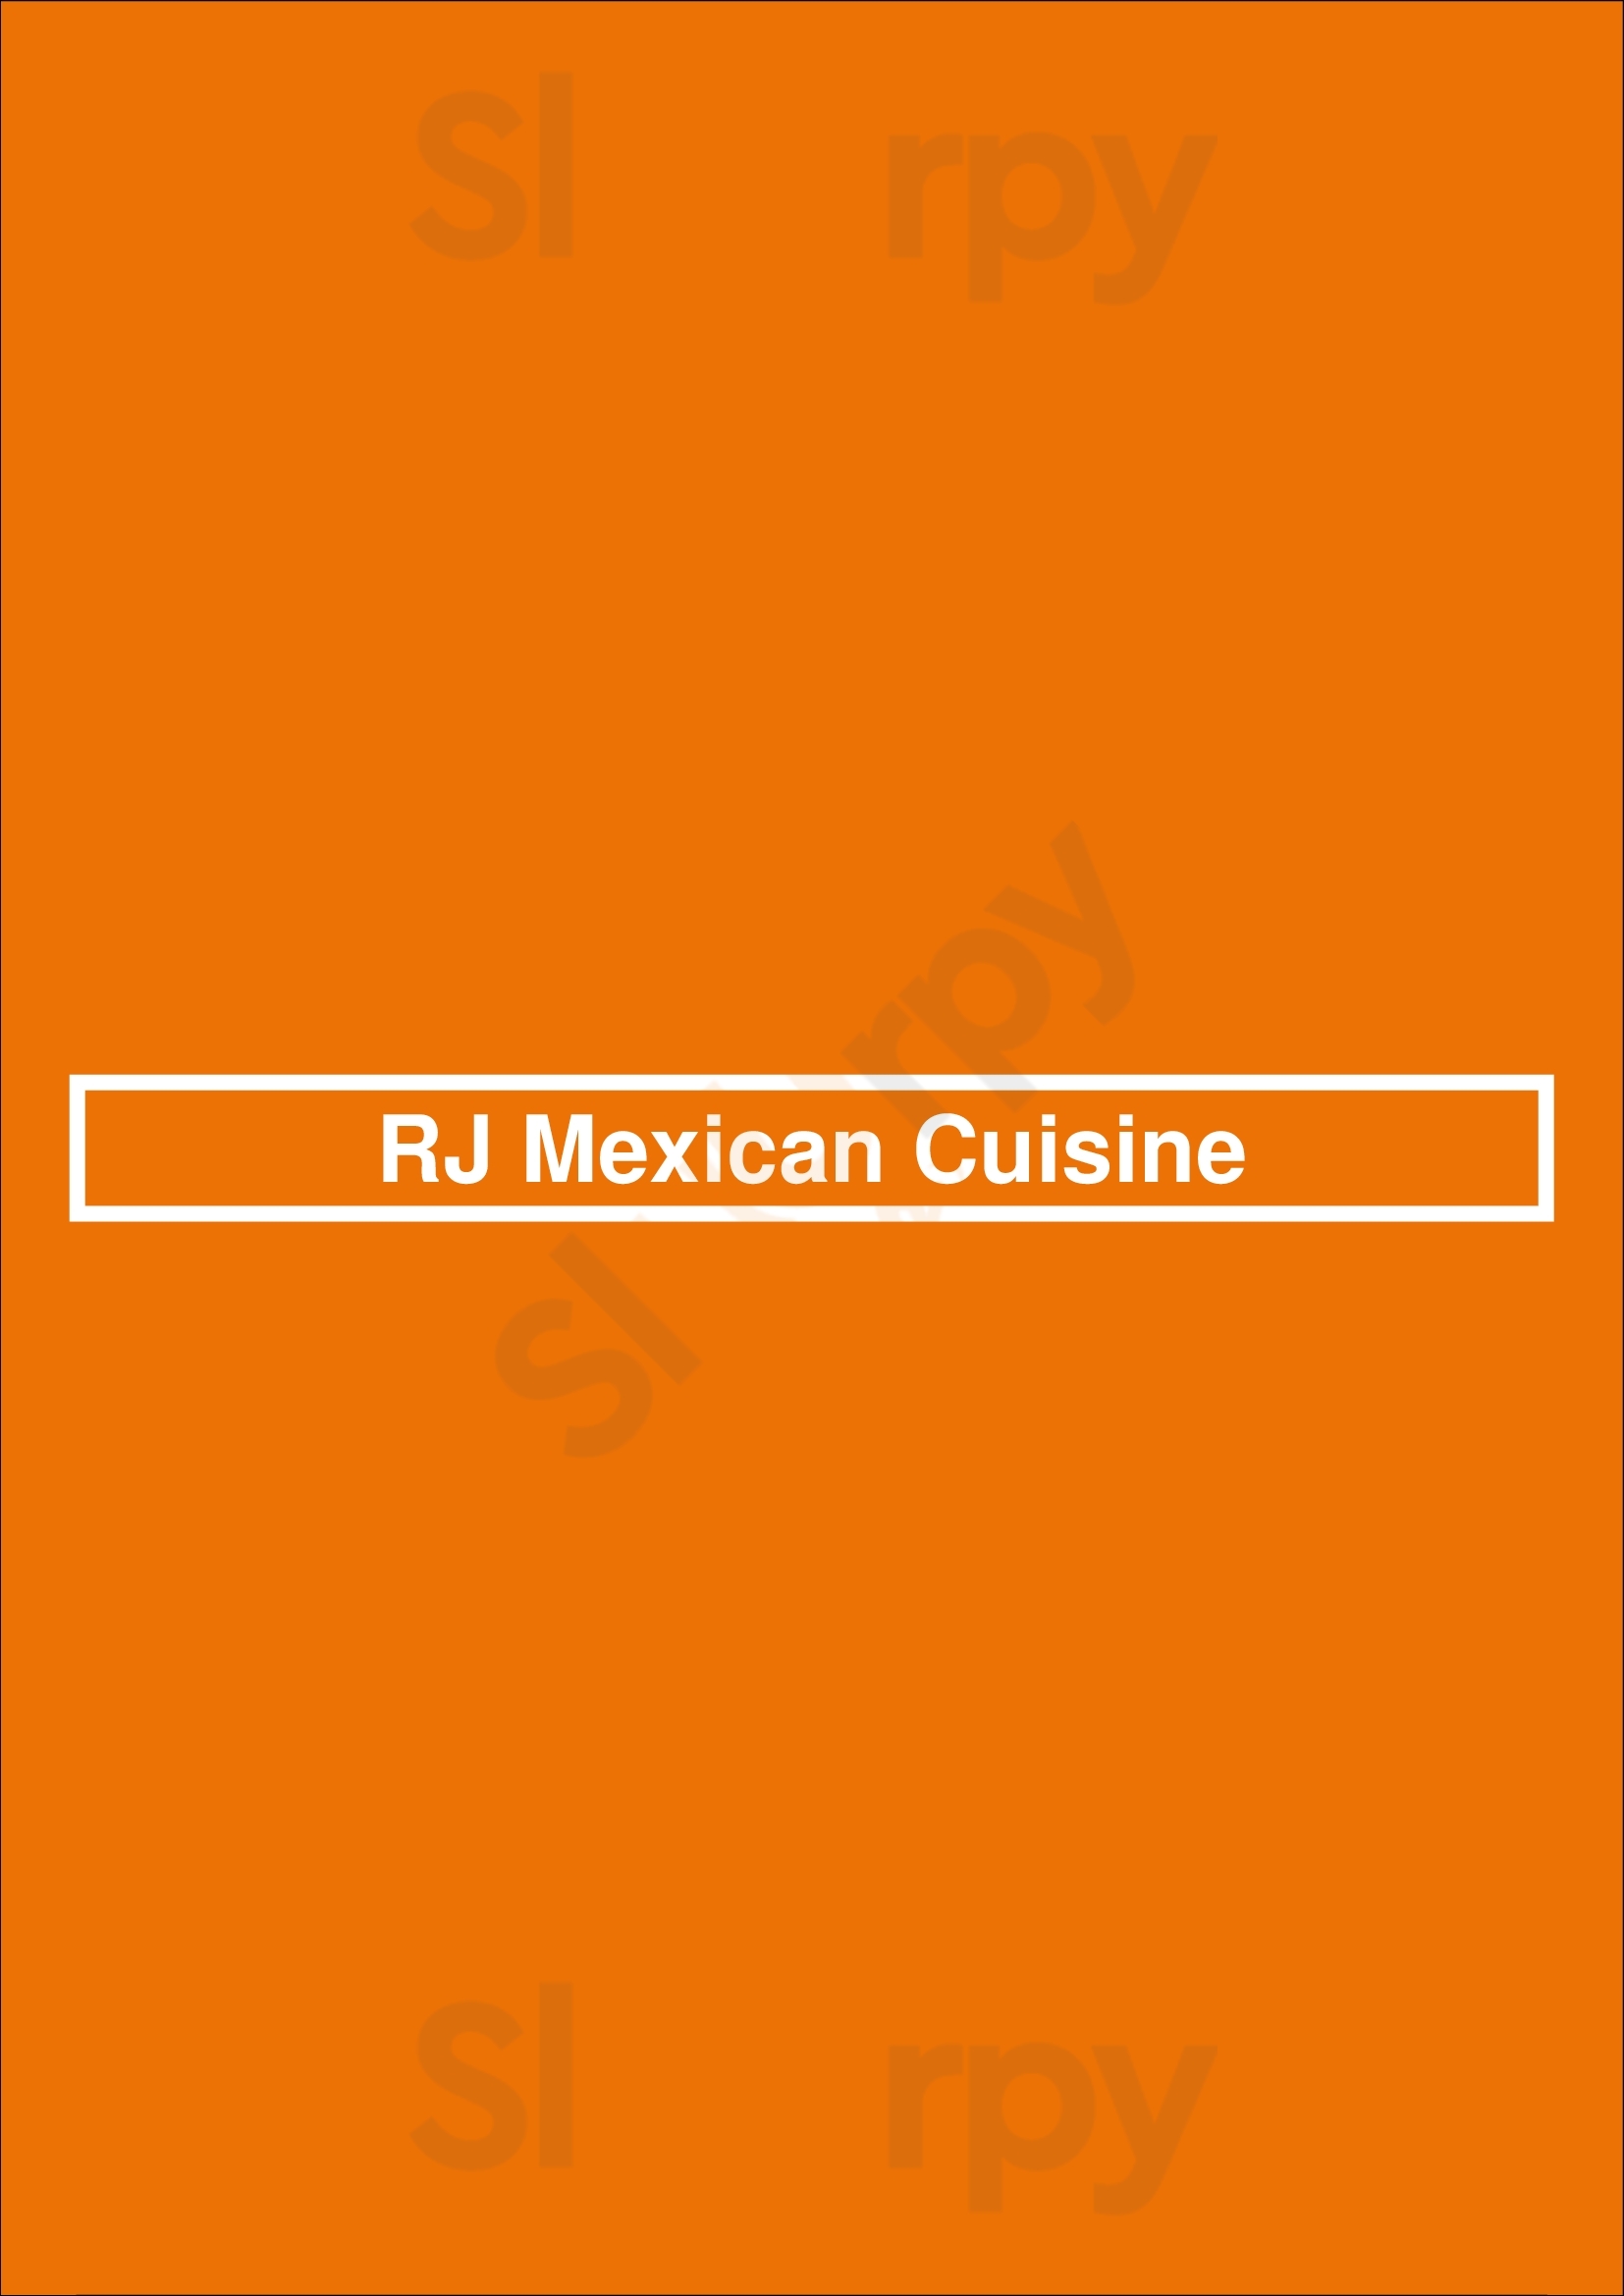 Rj Mexican Cuisine Dallas Menu - 1